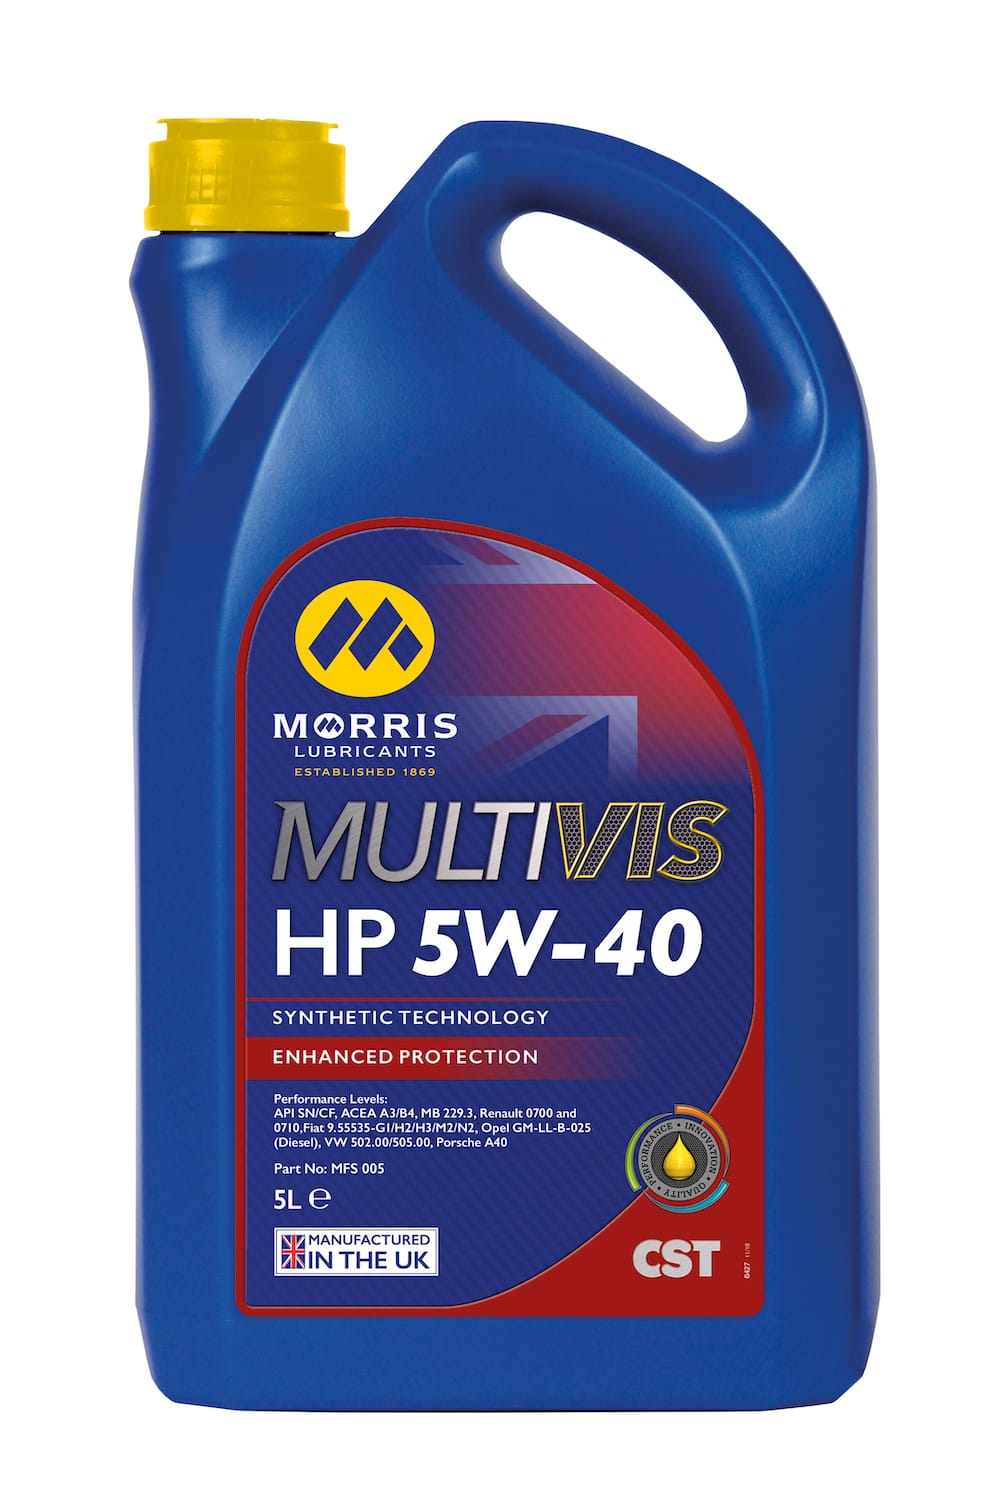 Multivis CST HP 5W-40